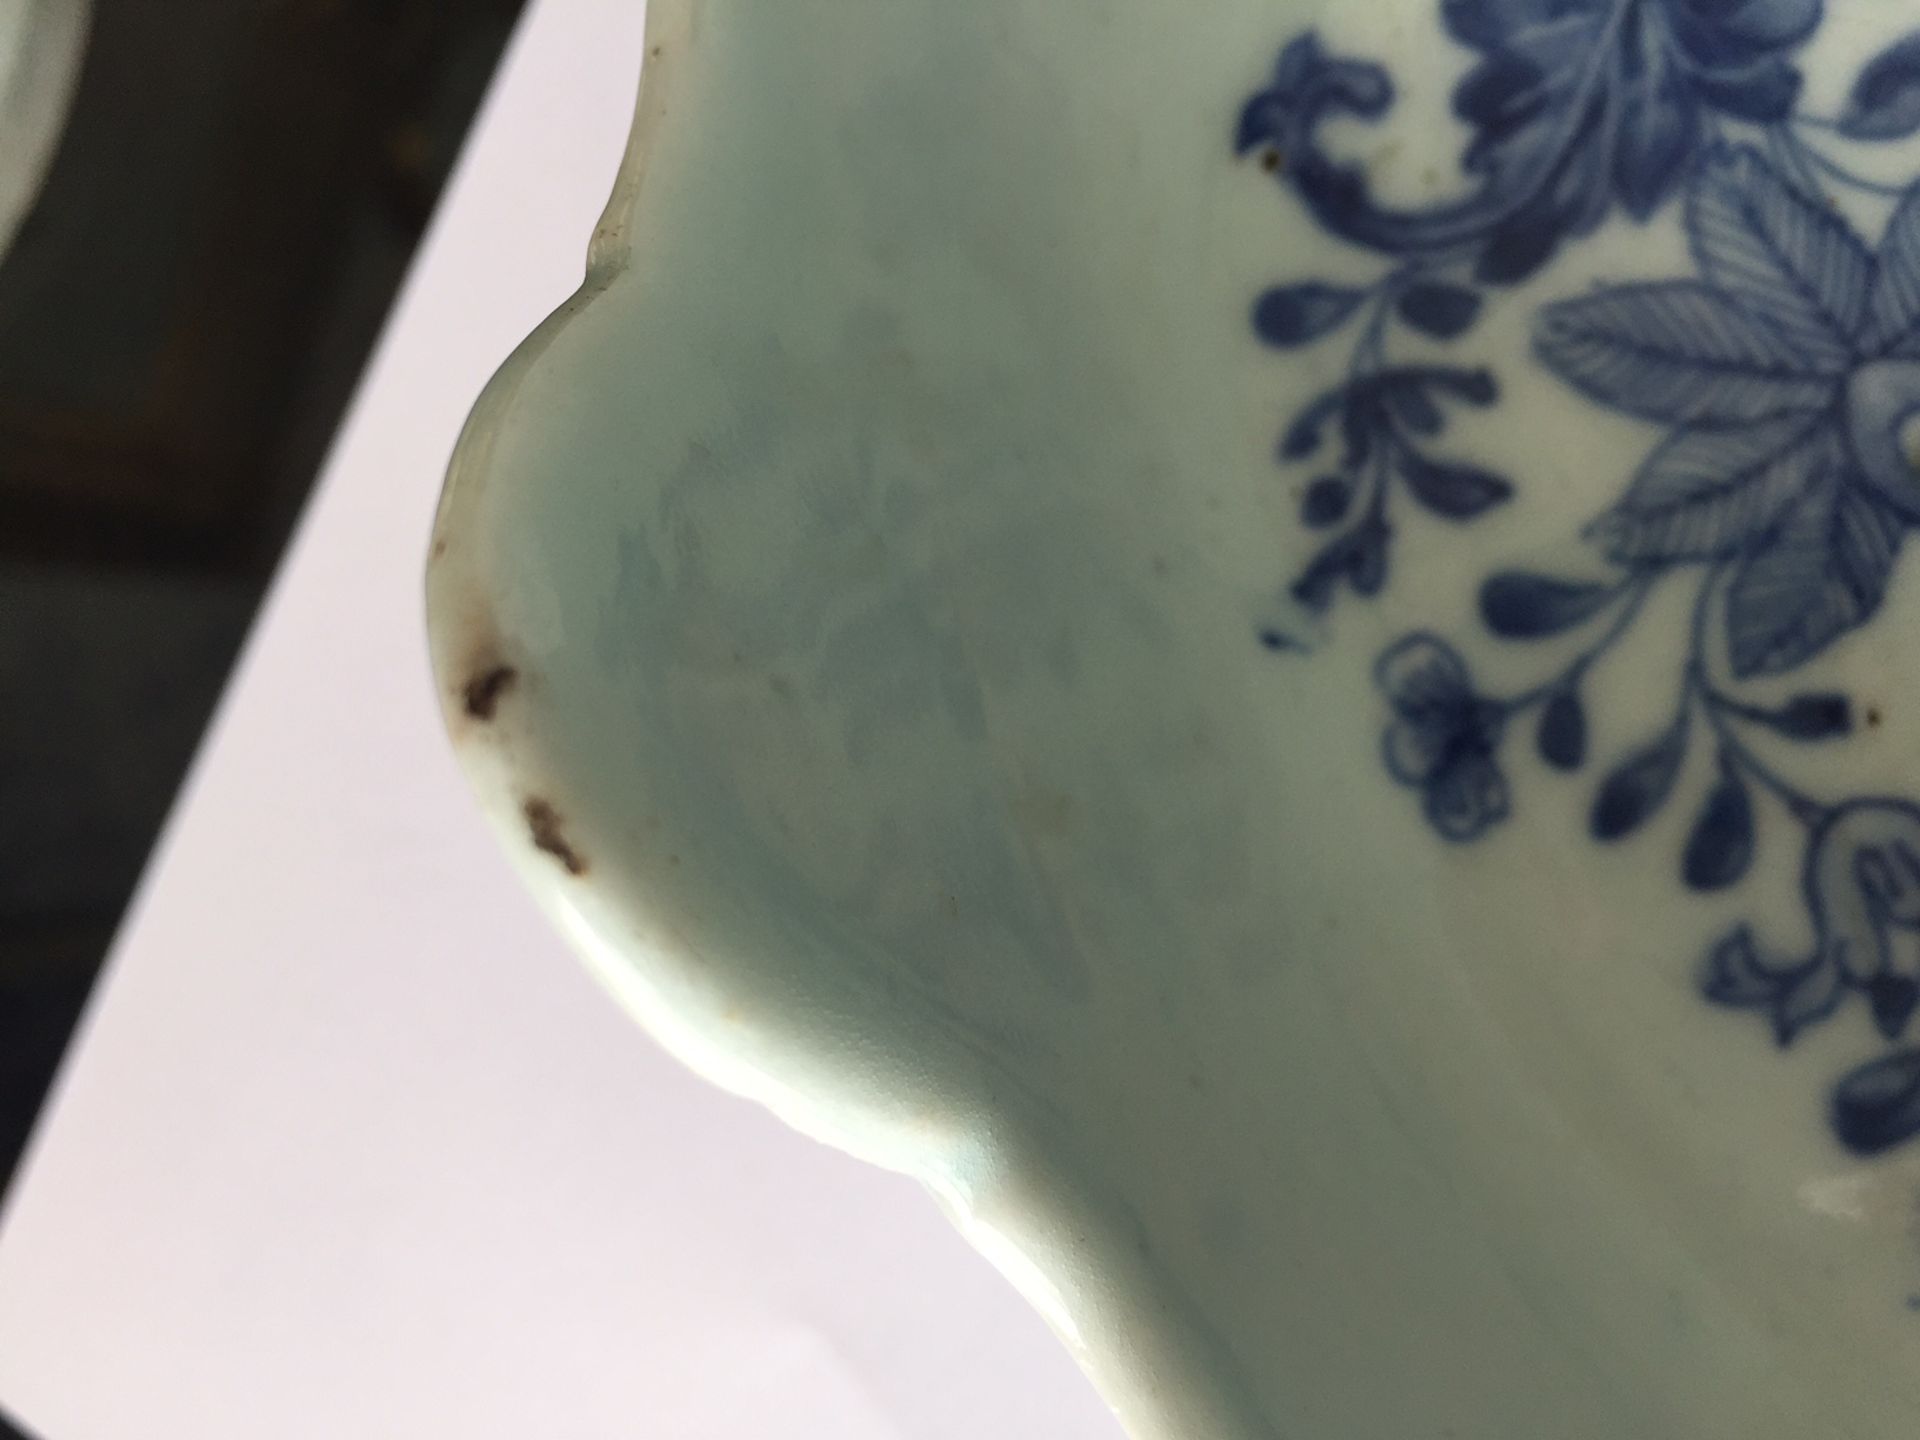 Rare pair of antique Chinese porcelain sauceboats, Circa 1750 (Qianlong period) - Image 10 of 20